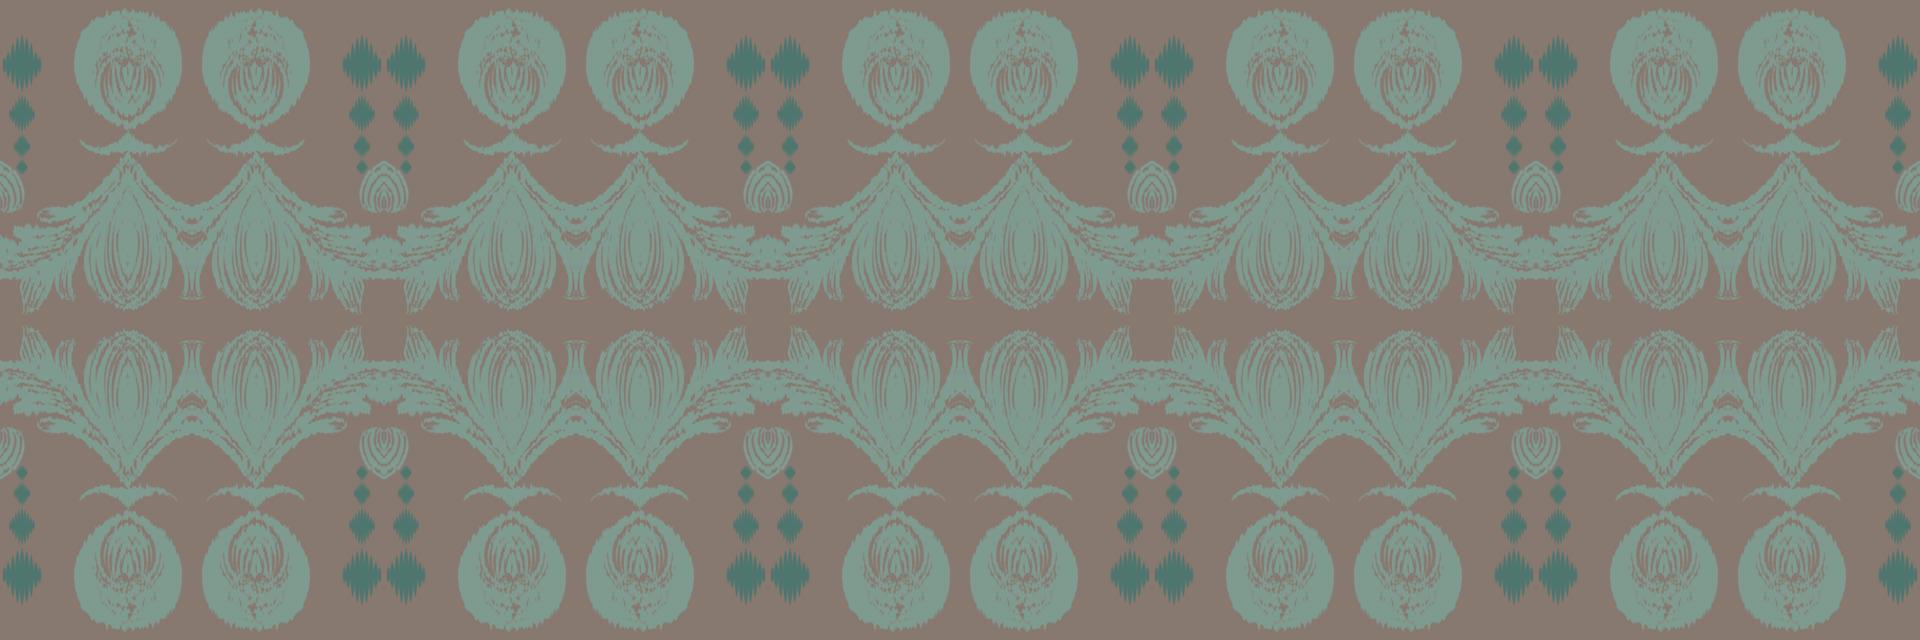 ikat diseña patrones sin fisuras de arte tribal. étnico geométrico ikkat batik vector digital diseño textil para estampados tela sari mughal cepillo símbolo franjas textura kurti kurtis kurtas